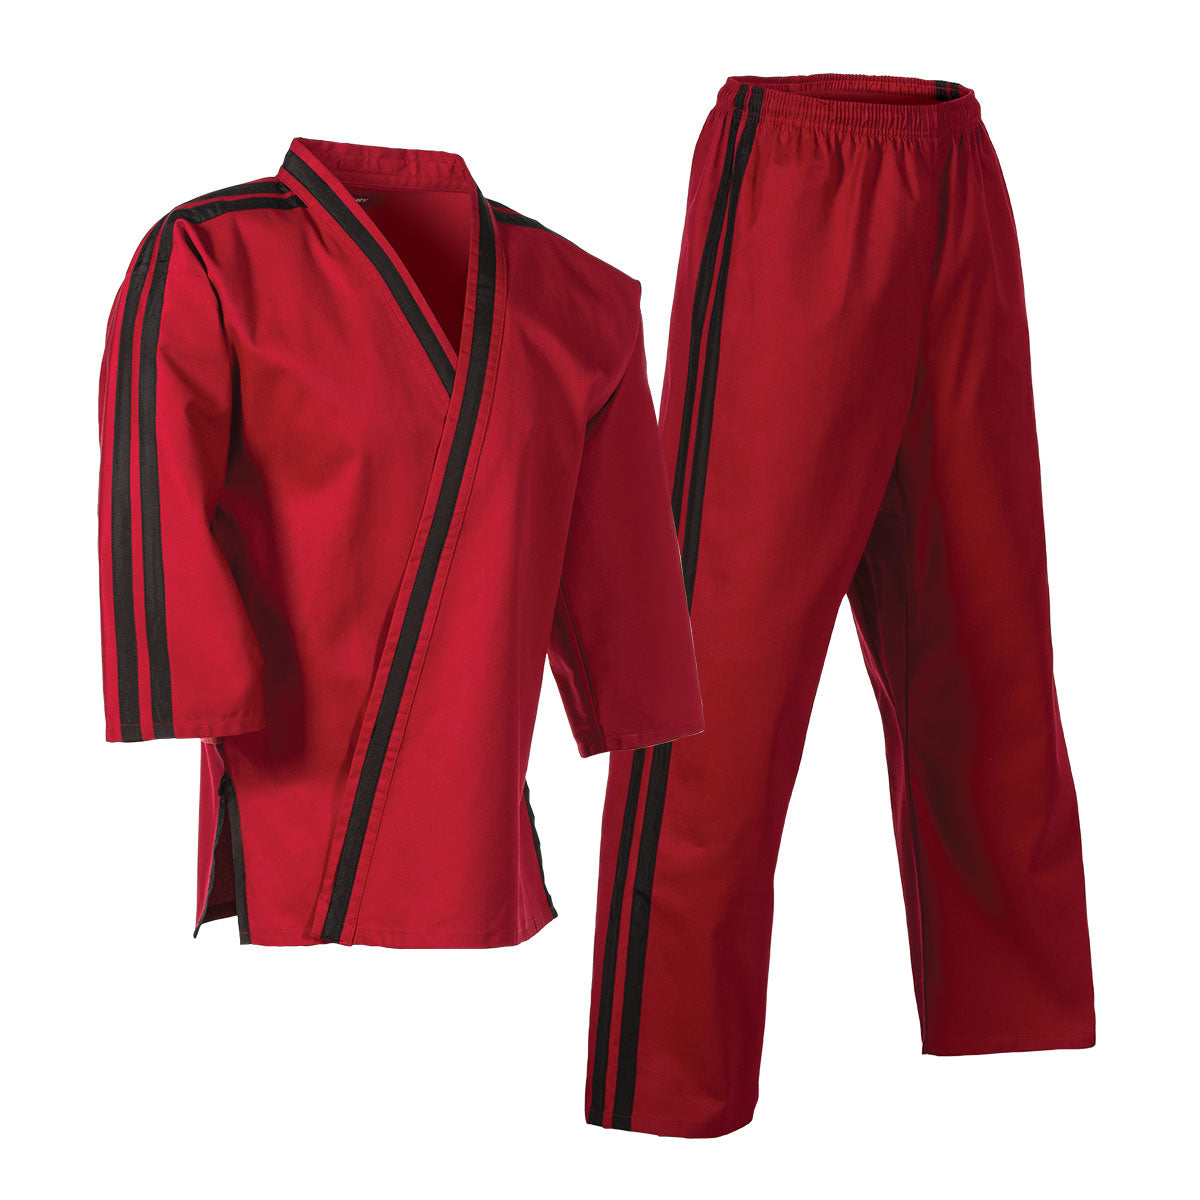 7 oz. Crossover Program Uniform - Level 2 Red/Black